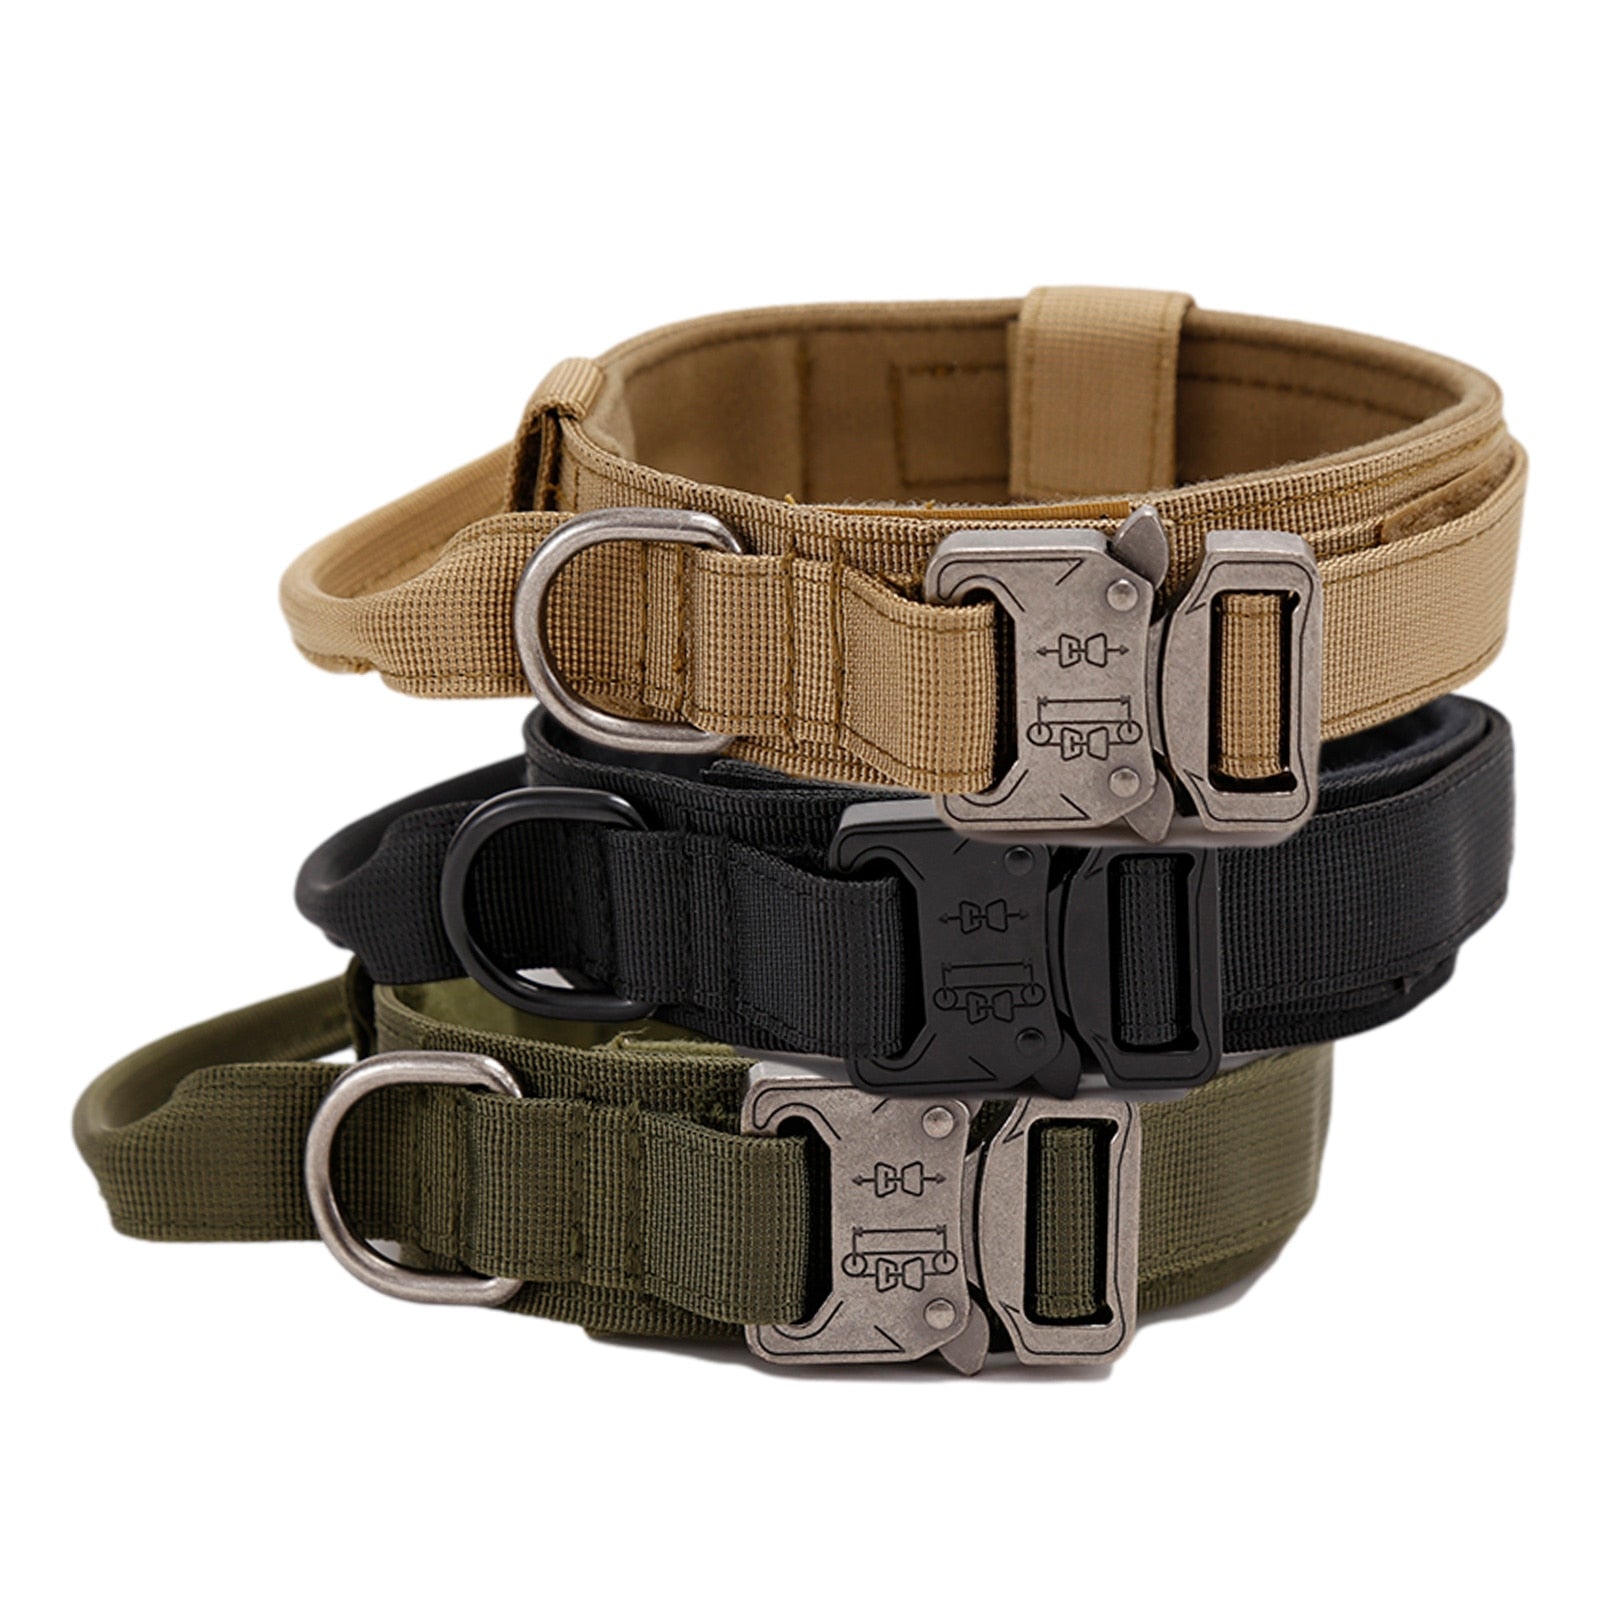 Tactical Pets Dog Collars - Golden Buy